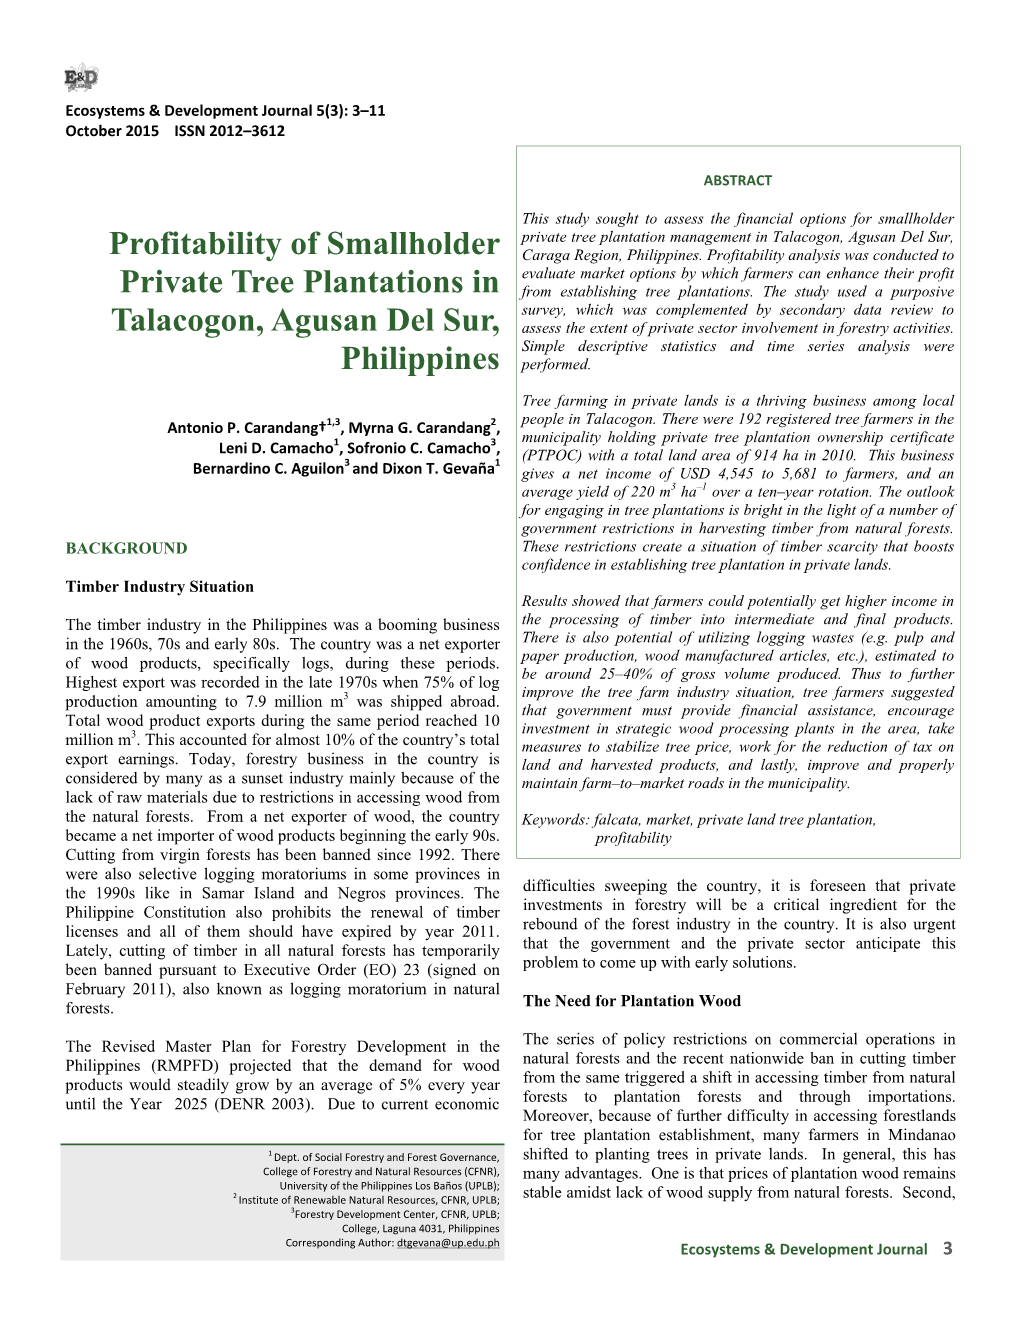 Profitability of Smallholder Private Tree Plantations in Talacogon, Agusan Del Sur, Philippines